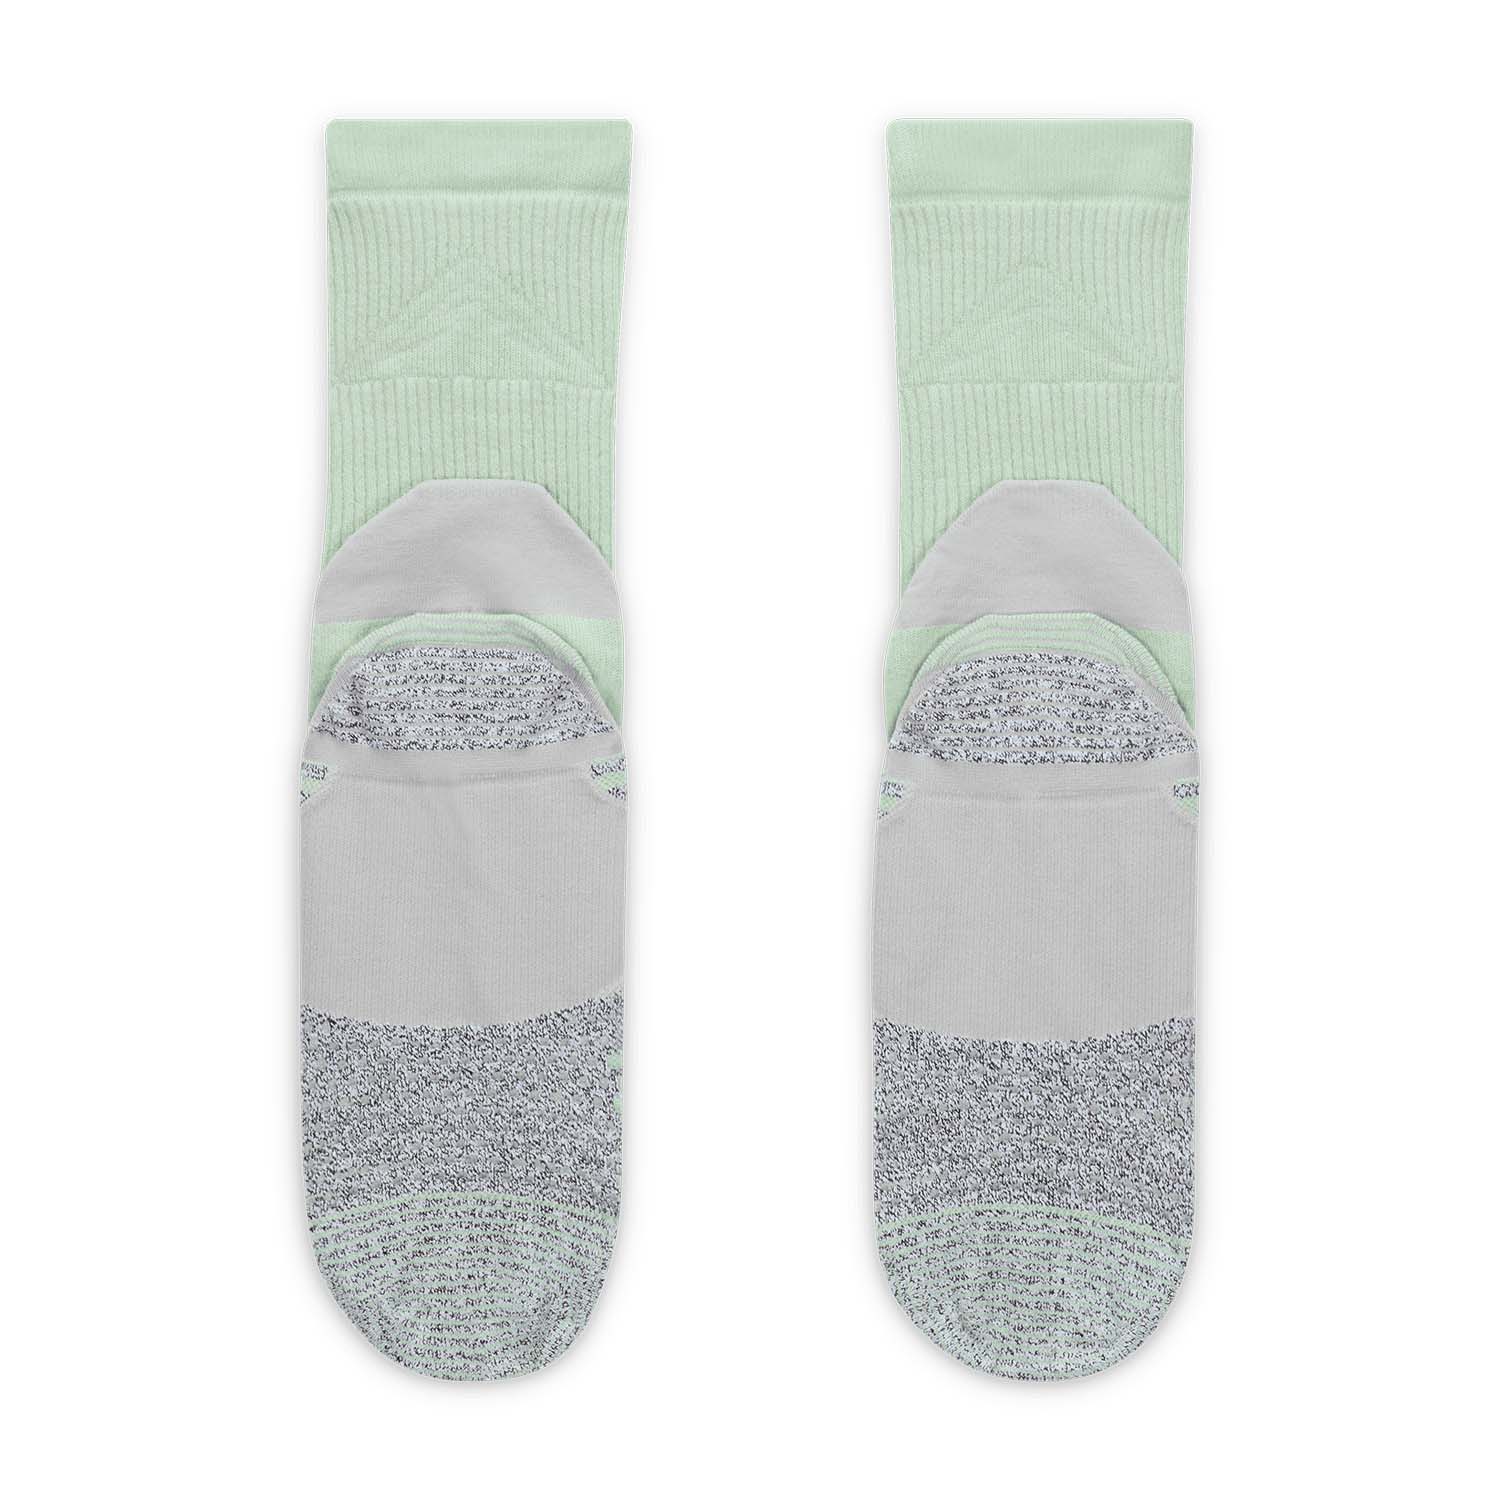 Nike Trail Crew Socks - Vapor Green/Light Iron Ore/Reflective Silver